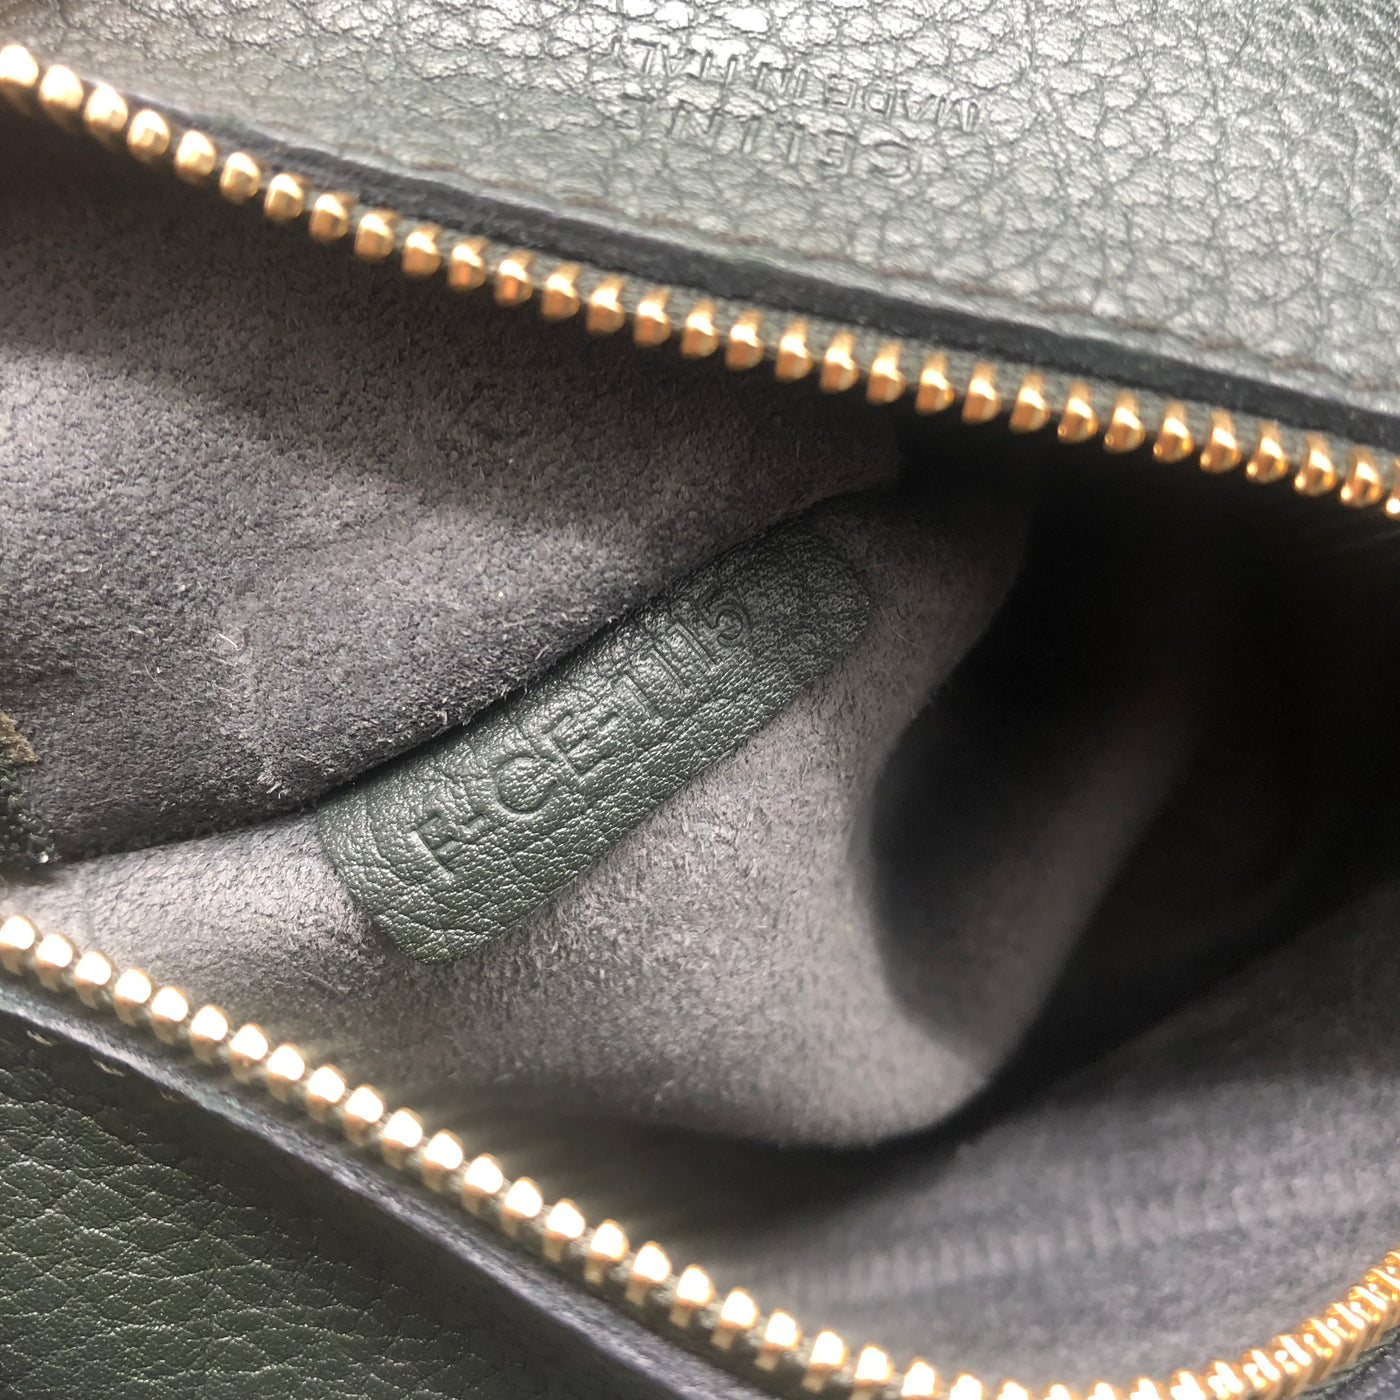 CELINE Tie Knot bottle green grain leather handbag